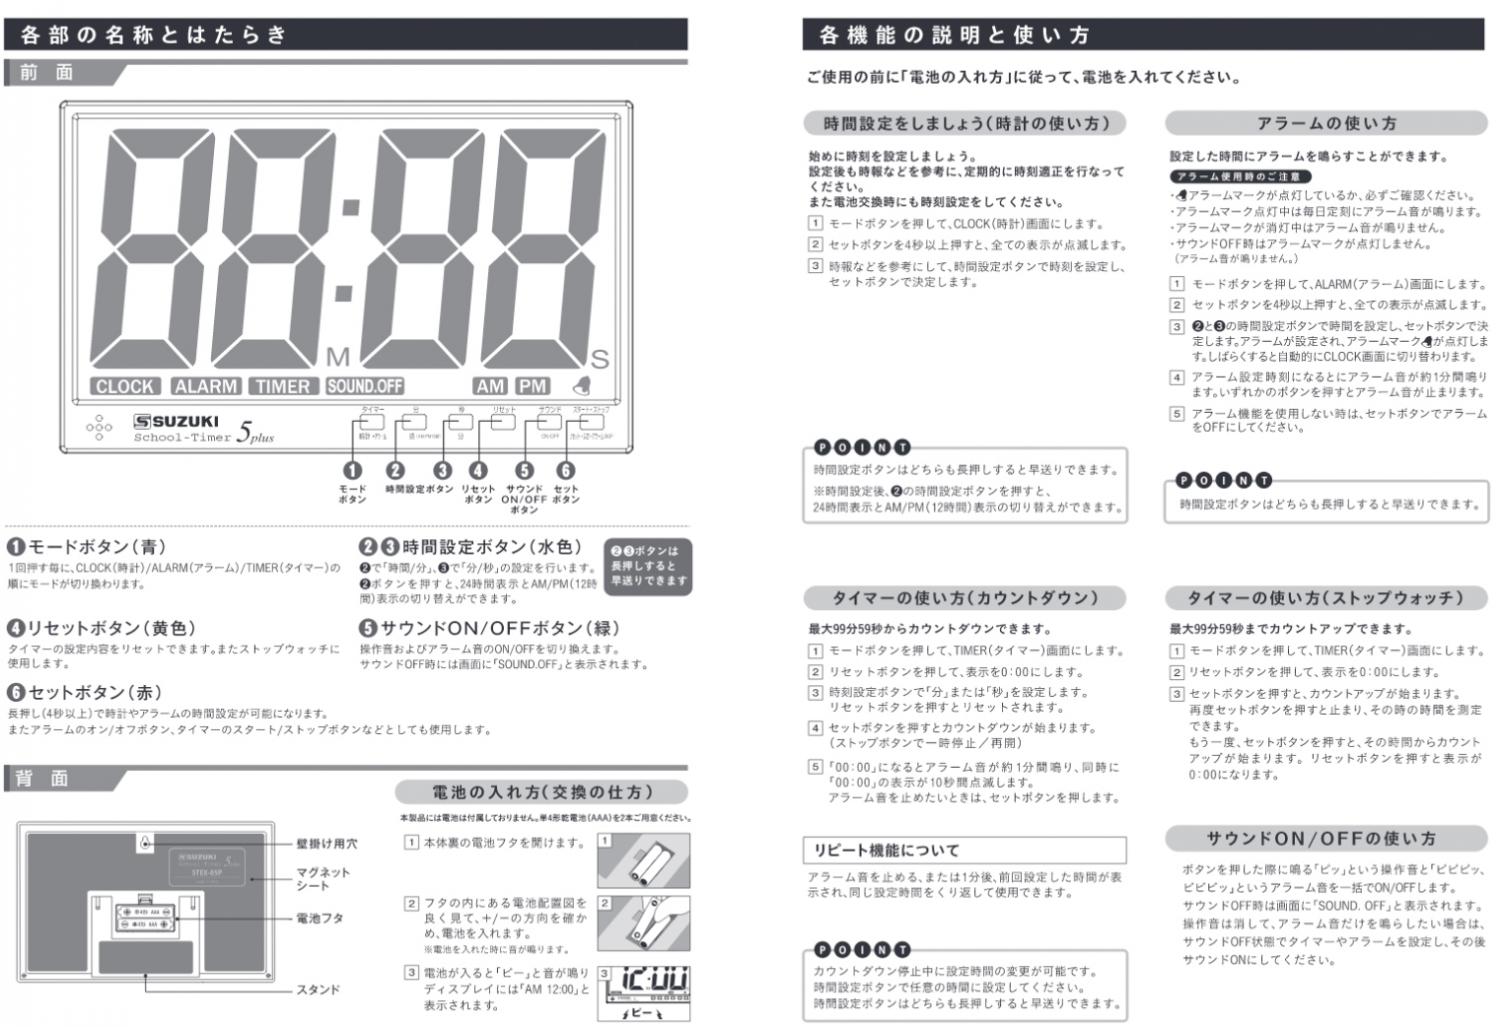 SUZUKI ( スズキ ) STEX-05P スクールタイマー5plus 表示用教材 School 